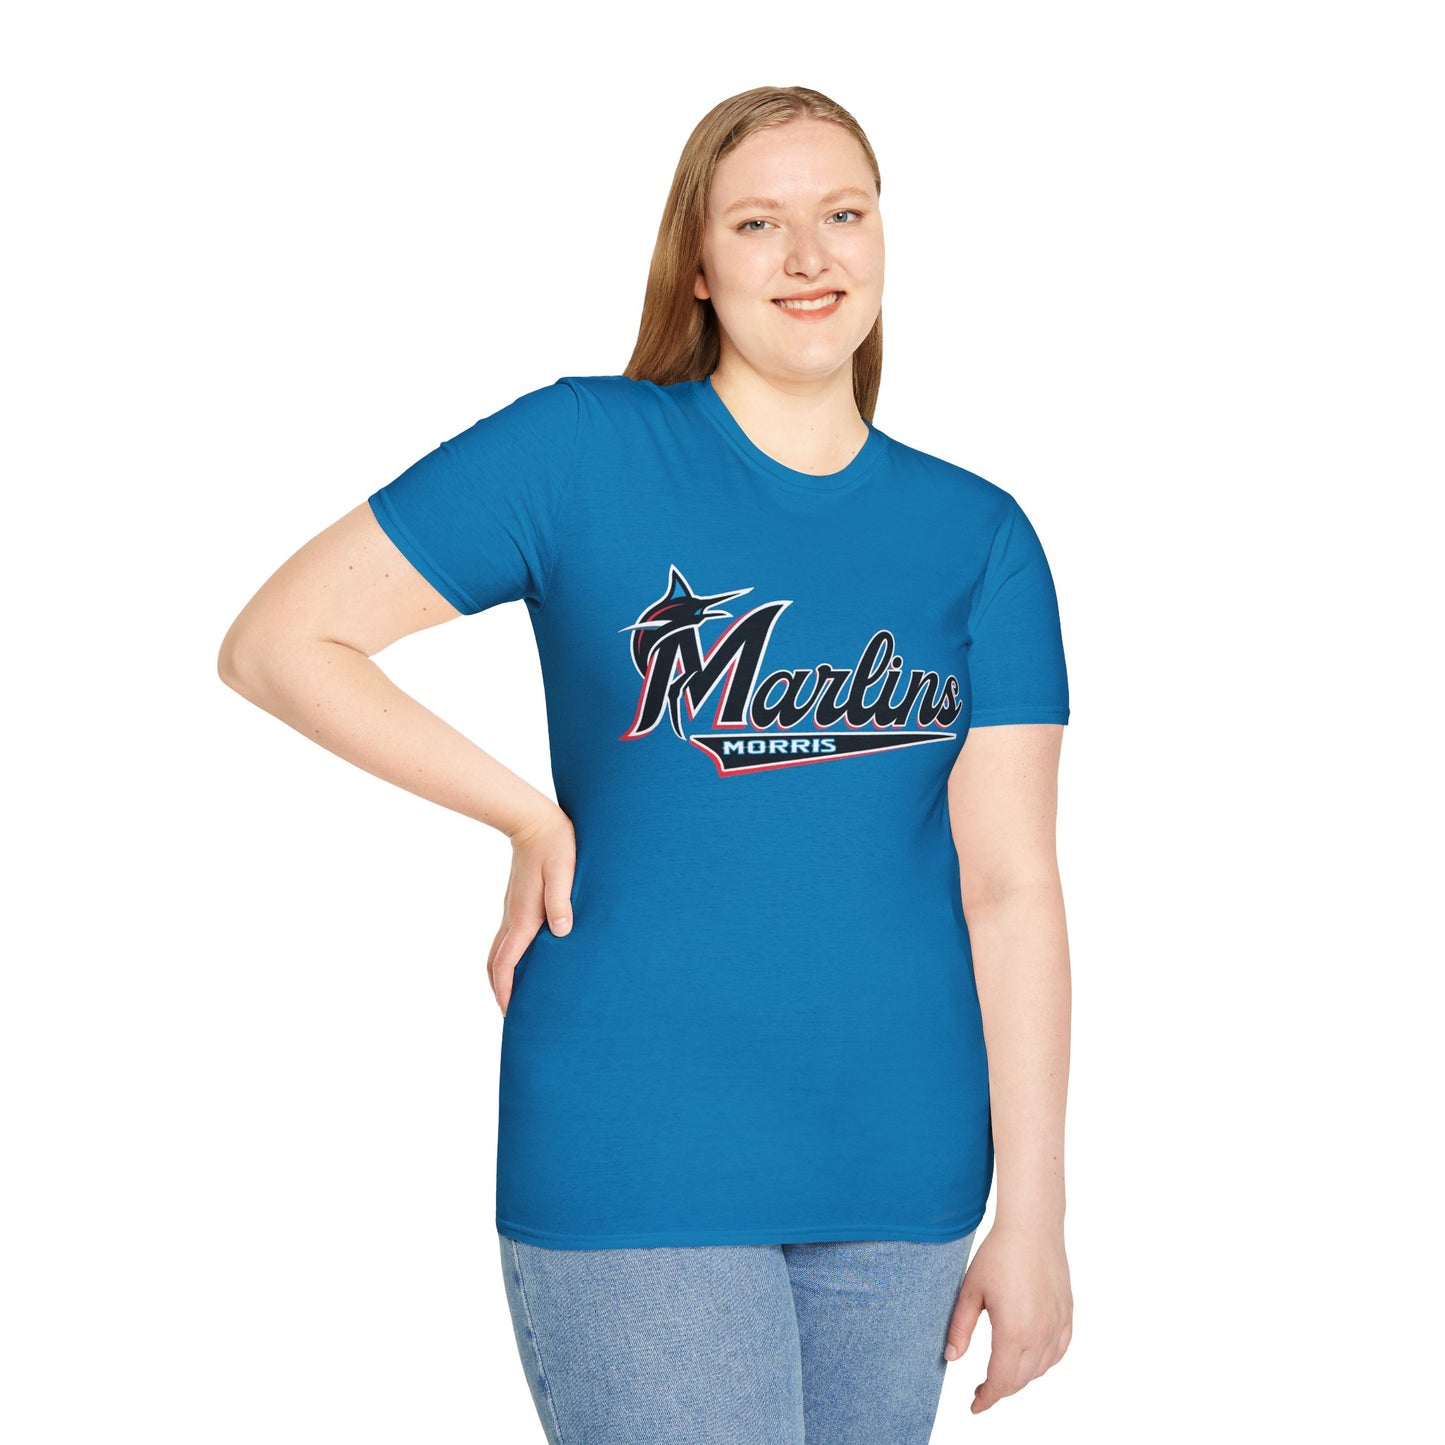 Morris Marlins Softstyle T-Shirt